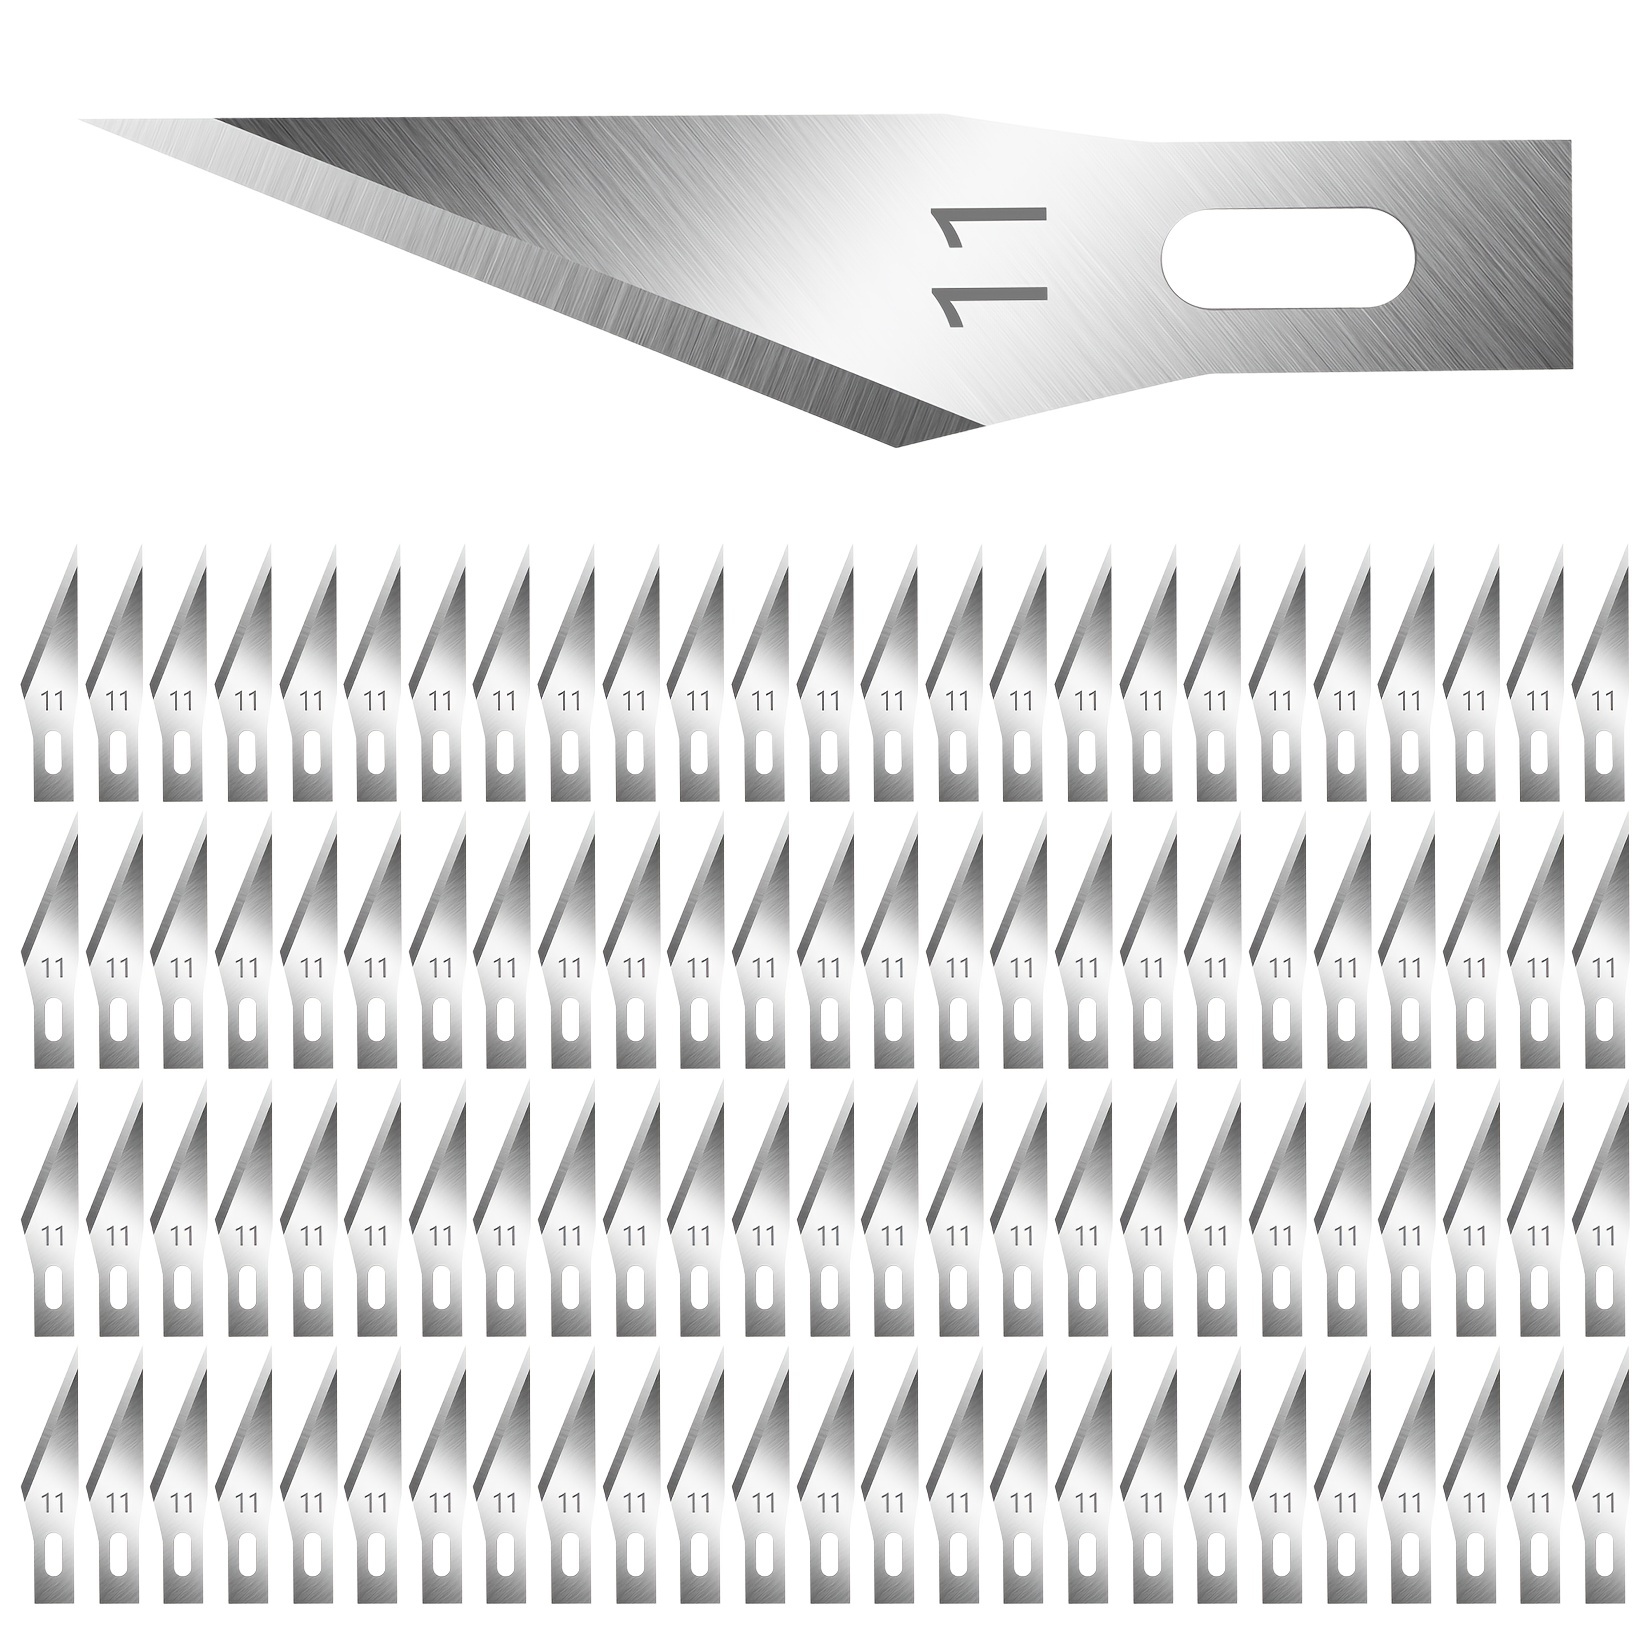 DIYSELF 150 PCS Exacto Knife Blades 11, Sharp Hobby Knife Blades, High  Carbon Steel Craft Knife Blades, 11 Hobby Knife Replacement Blades, Exacto  Blades for Art, Scrapbooking, Stencil, Paper Cutting #11